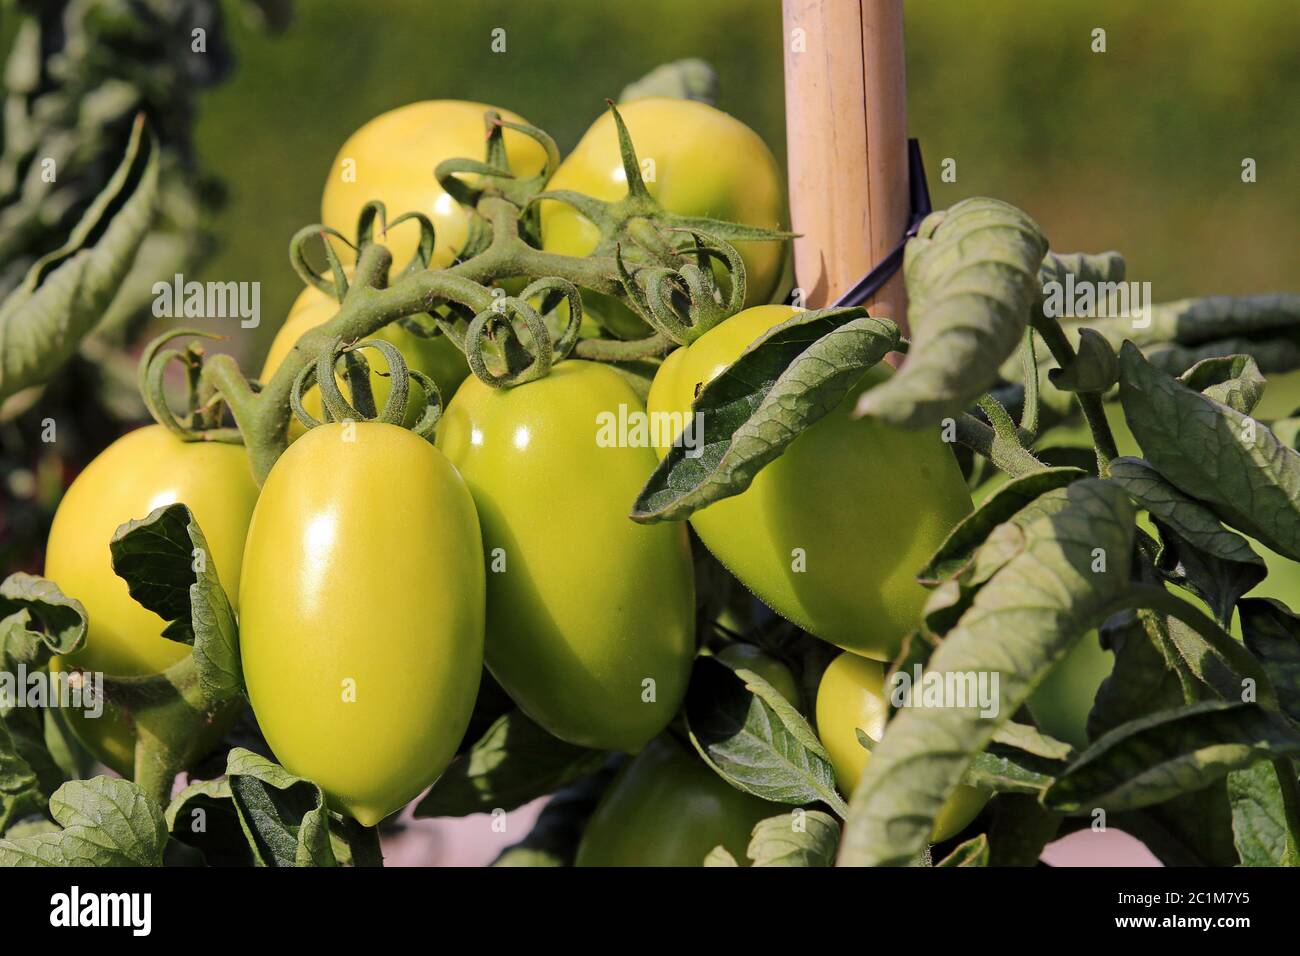 green egg tomatoes in the farm garden Stock Photo